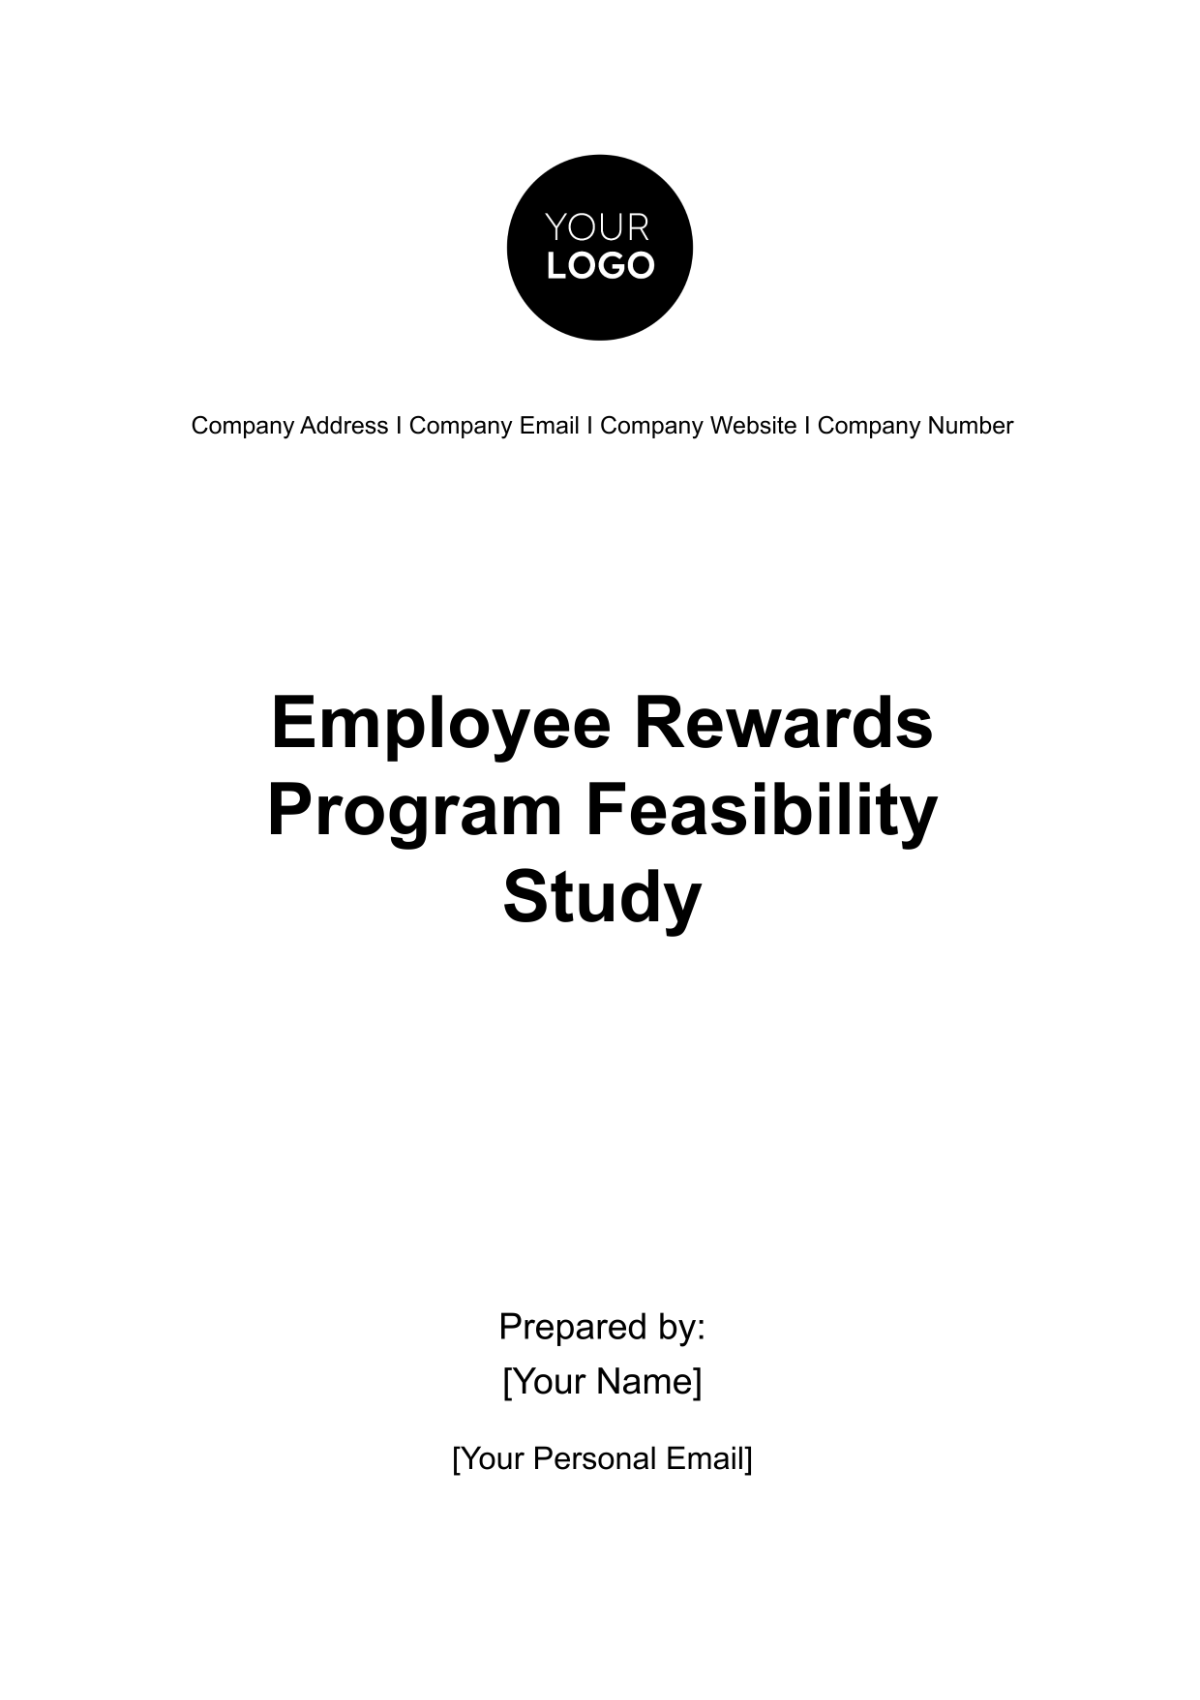 Employee Rewards Program Feasibility Study HR Template